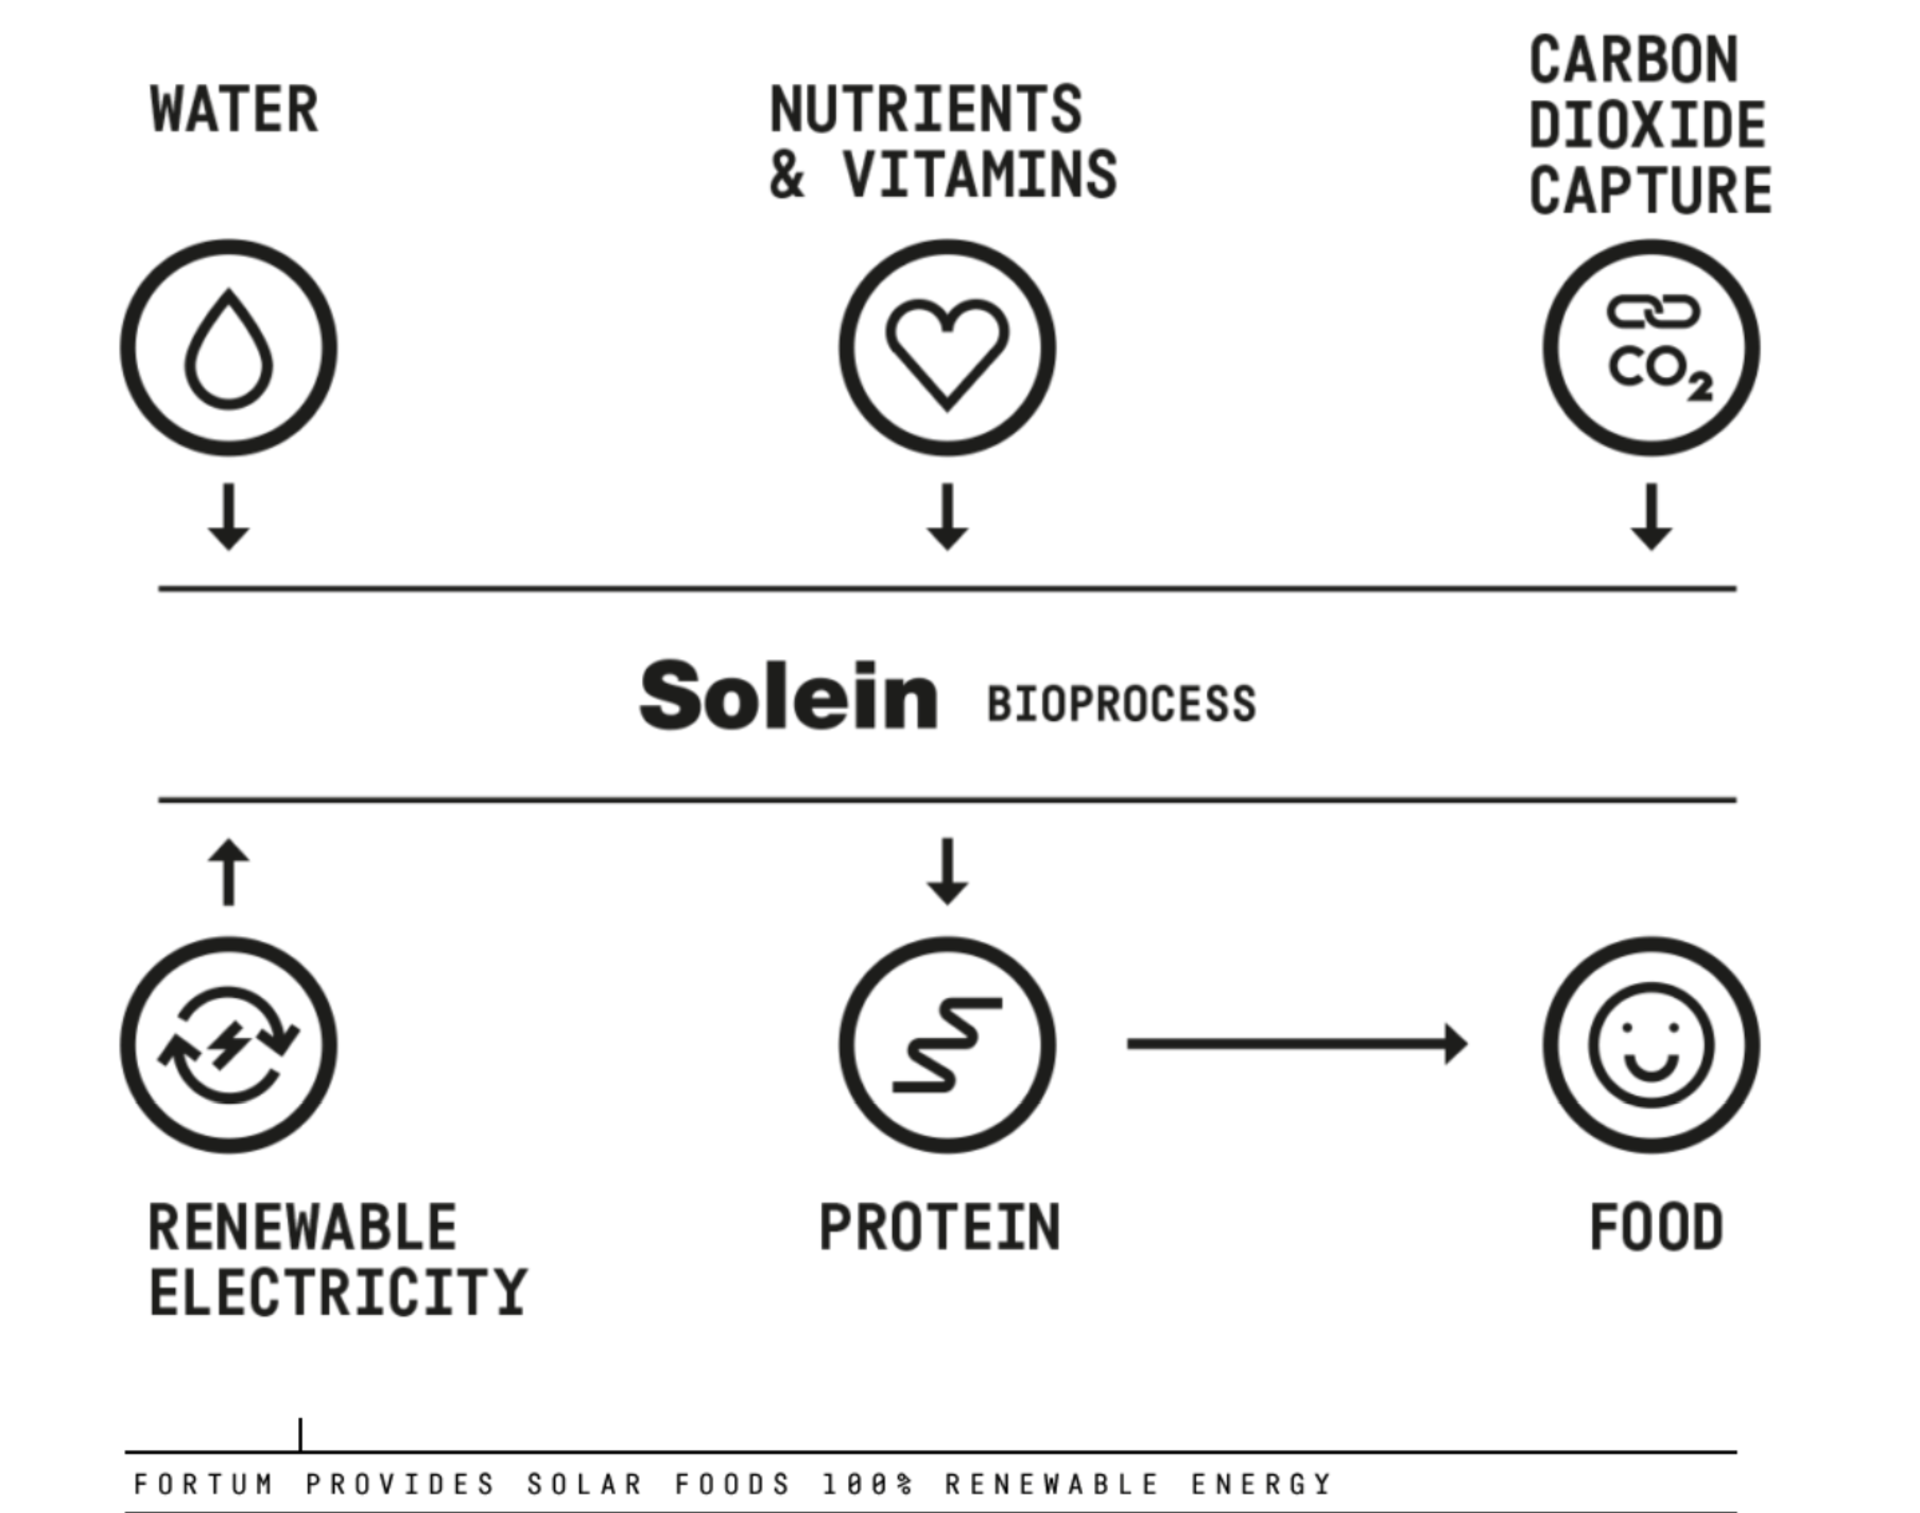 Solar Foods: Solein process